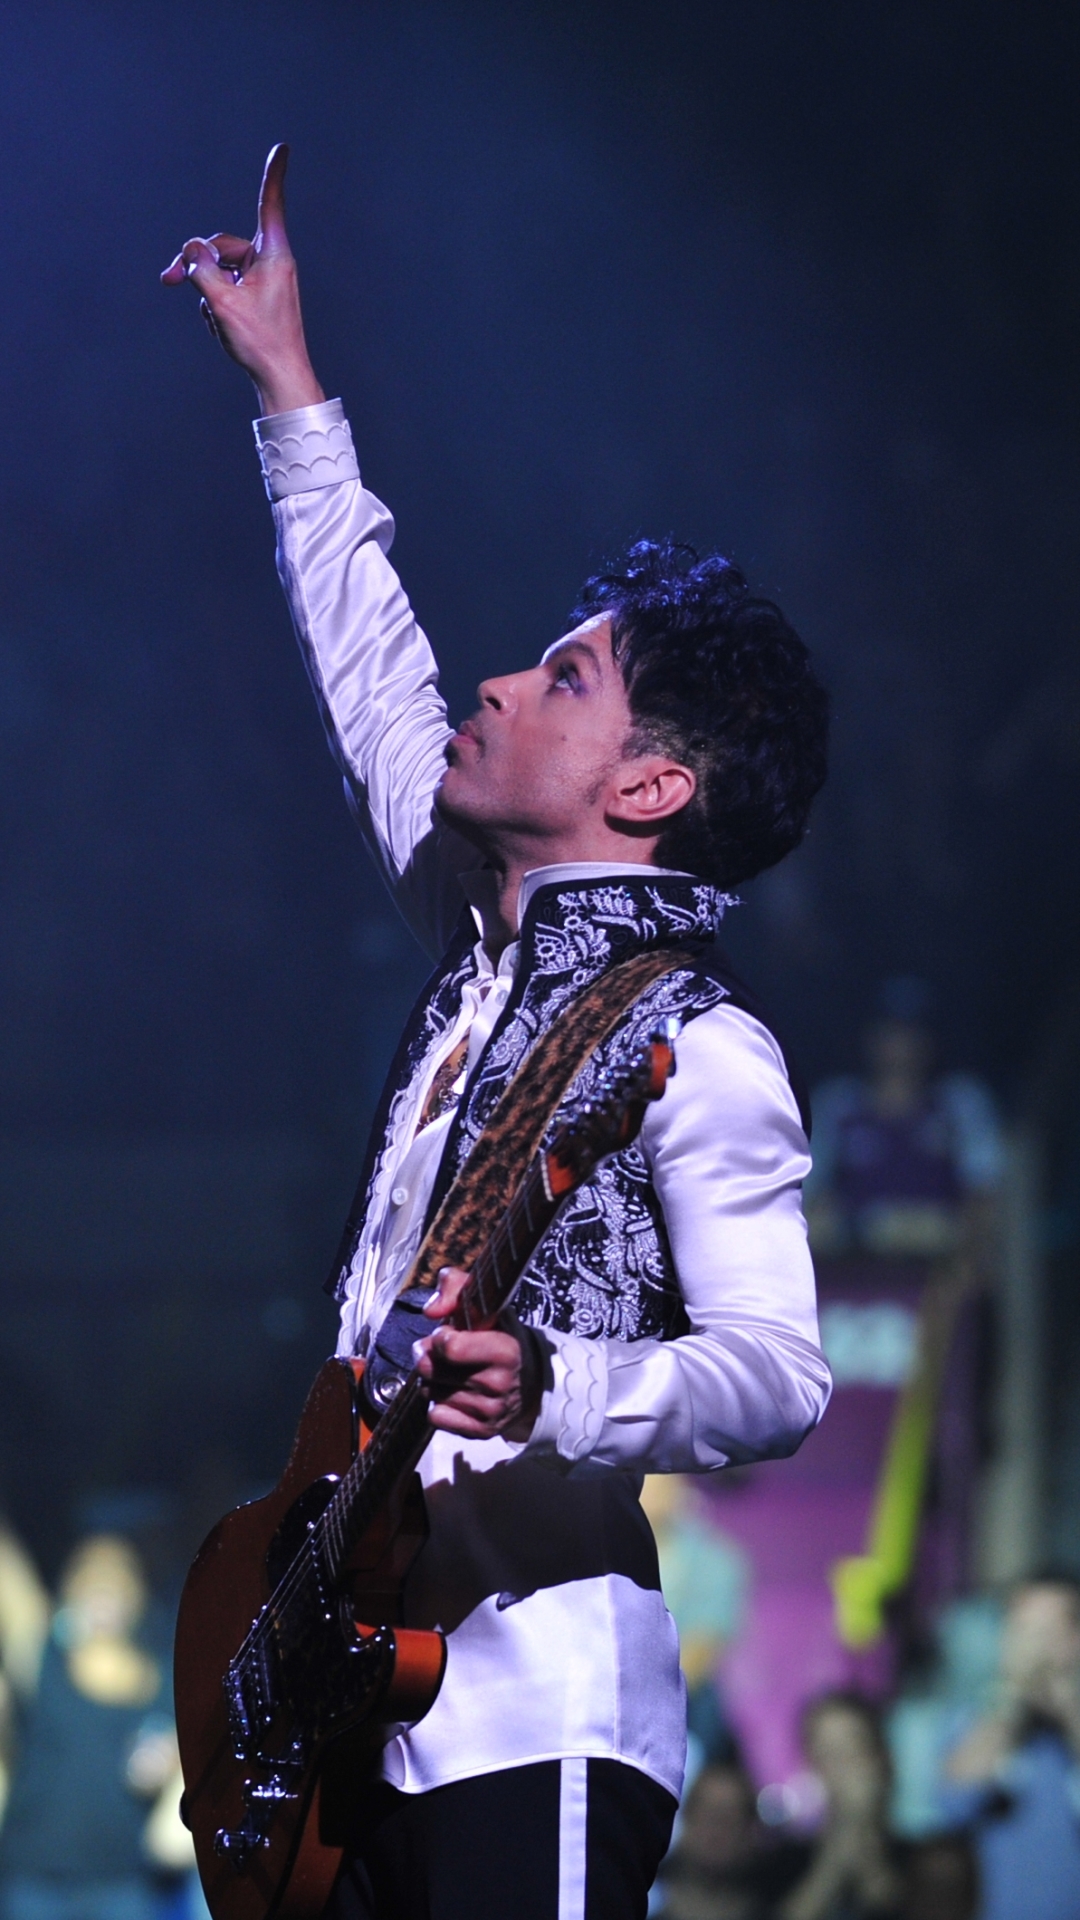 prince (singer), prince, music, guitar, singer, american, concert